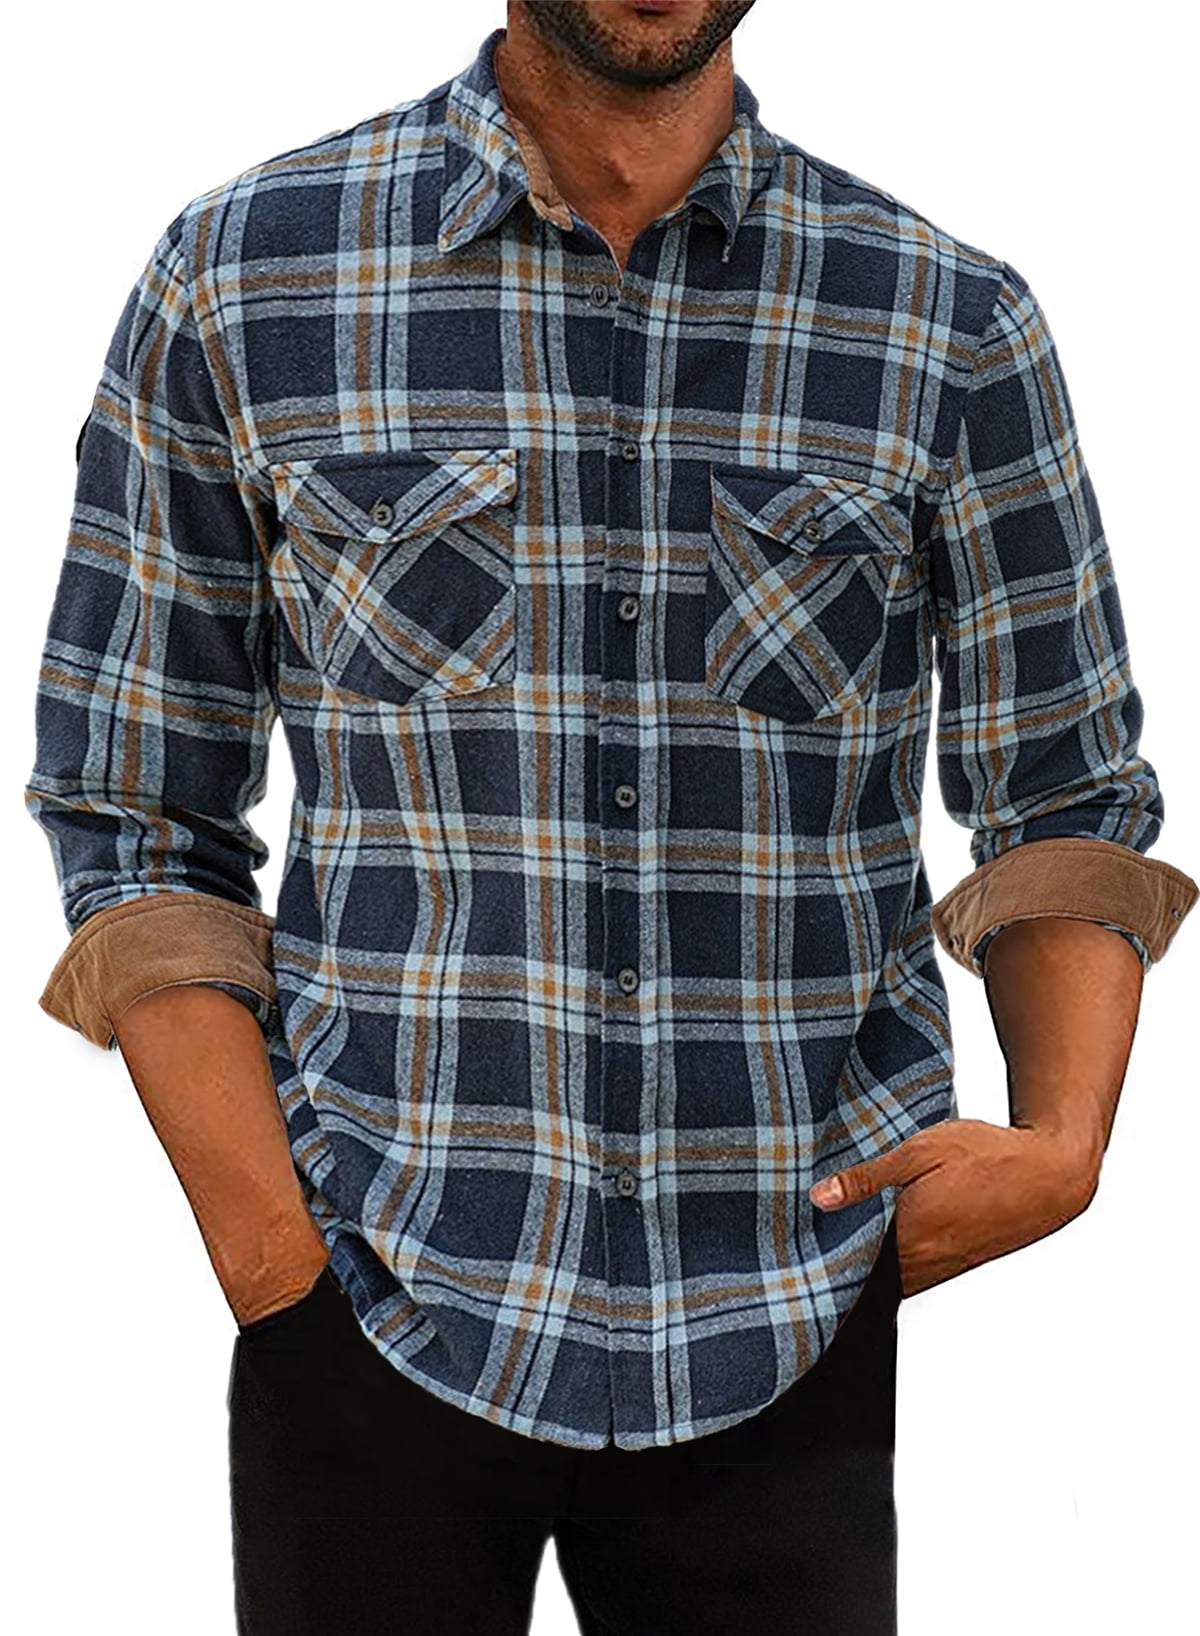 JMIERR Mens Flannel Shirts Long Sleeve Plaid Shirt for Men Pockets ...